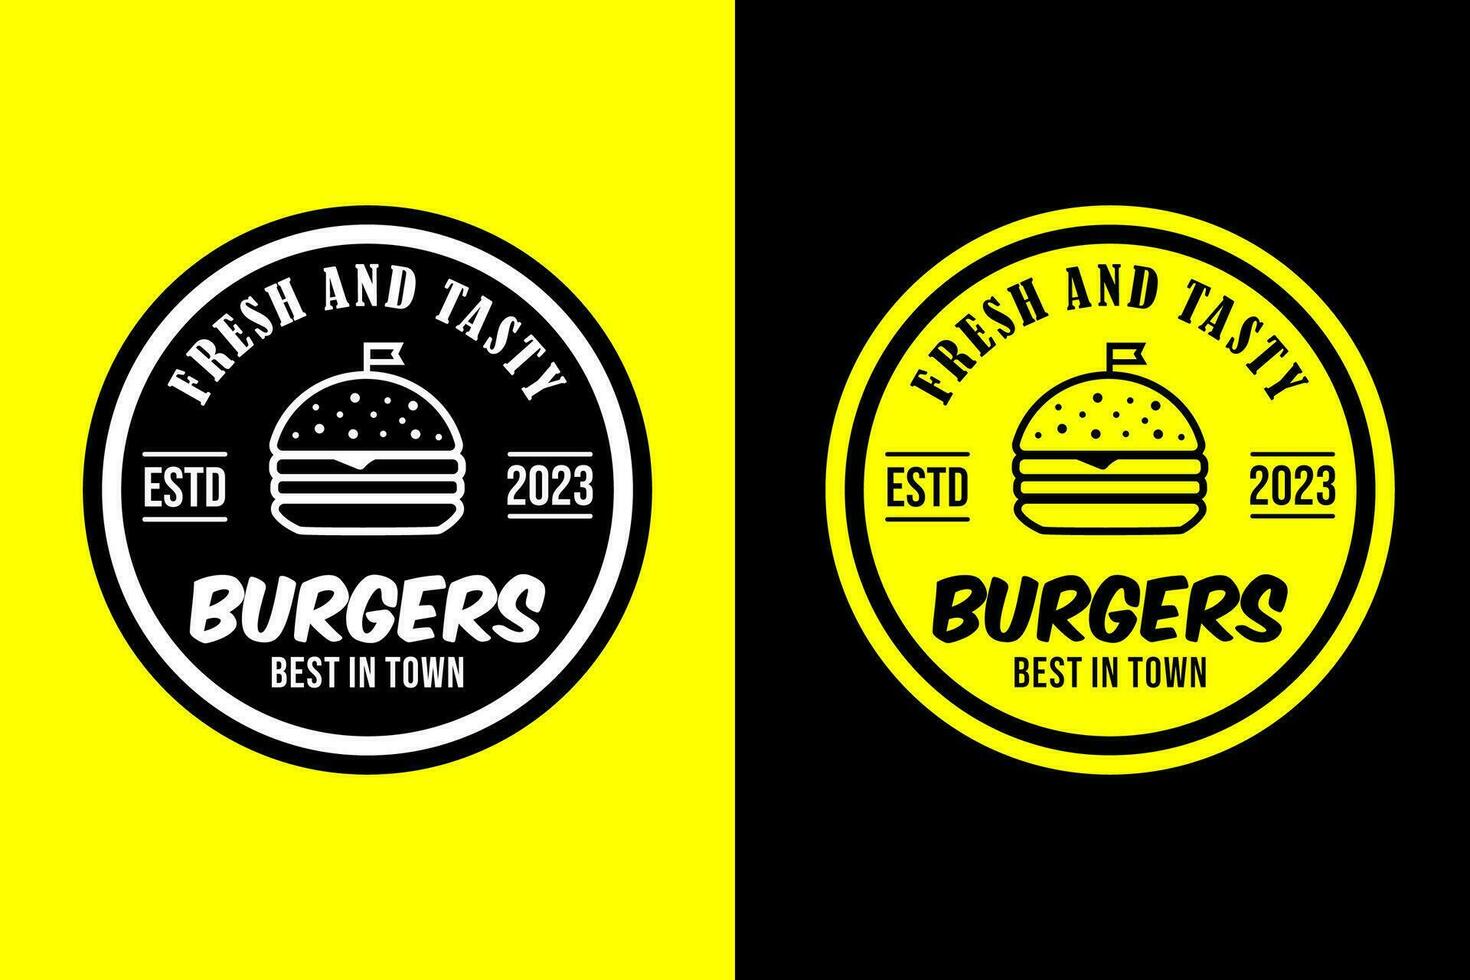 Burger logo vector art design fresh and tasty